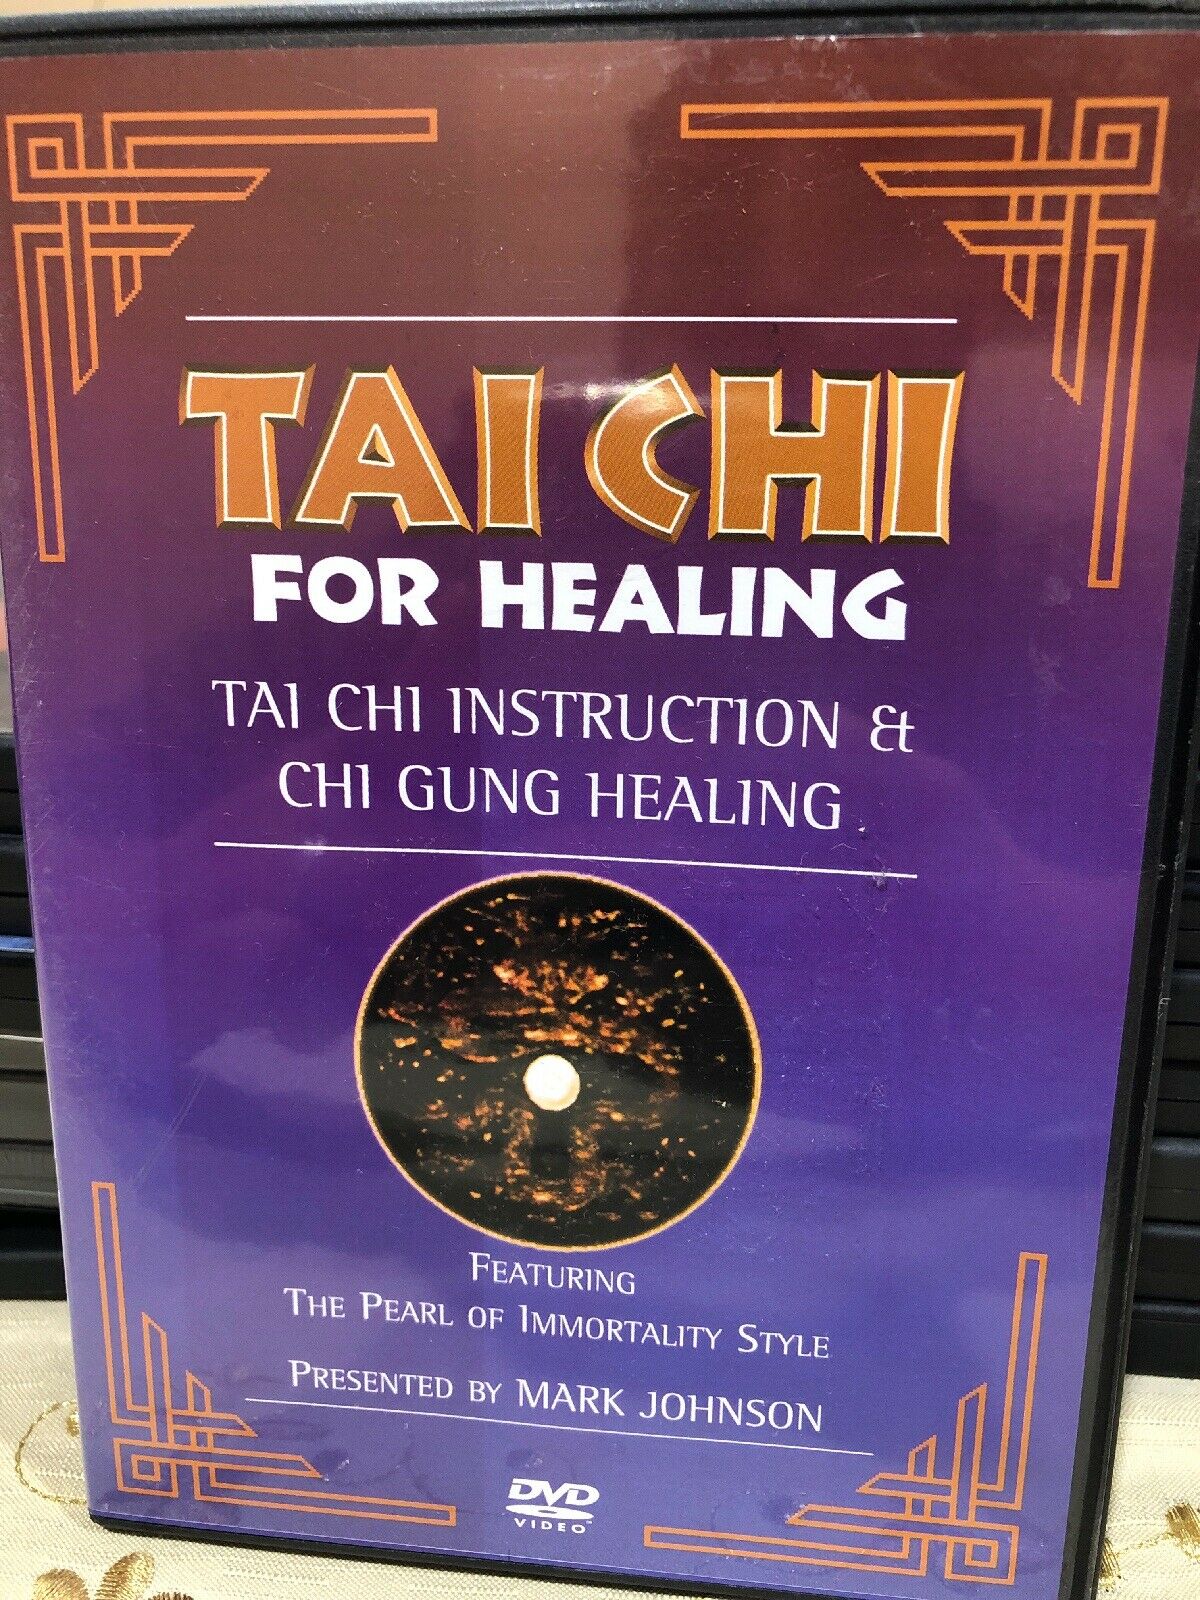 Tai Chi For Healing Tai Chi Indtruction Et Chi Gung Healing By Mark Johnson Dvd